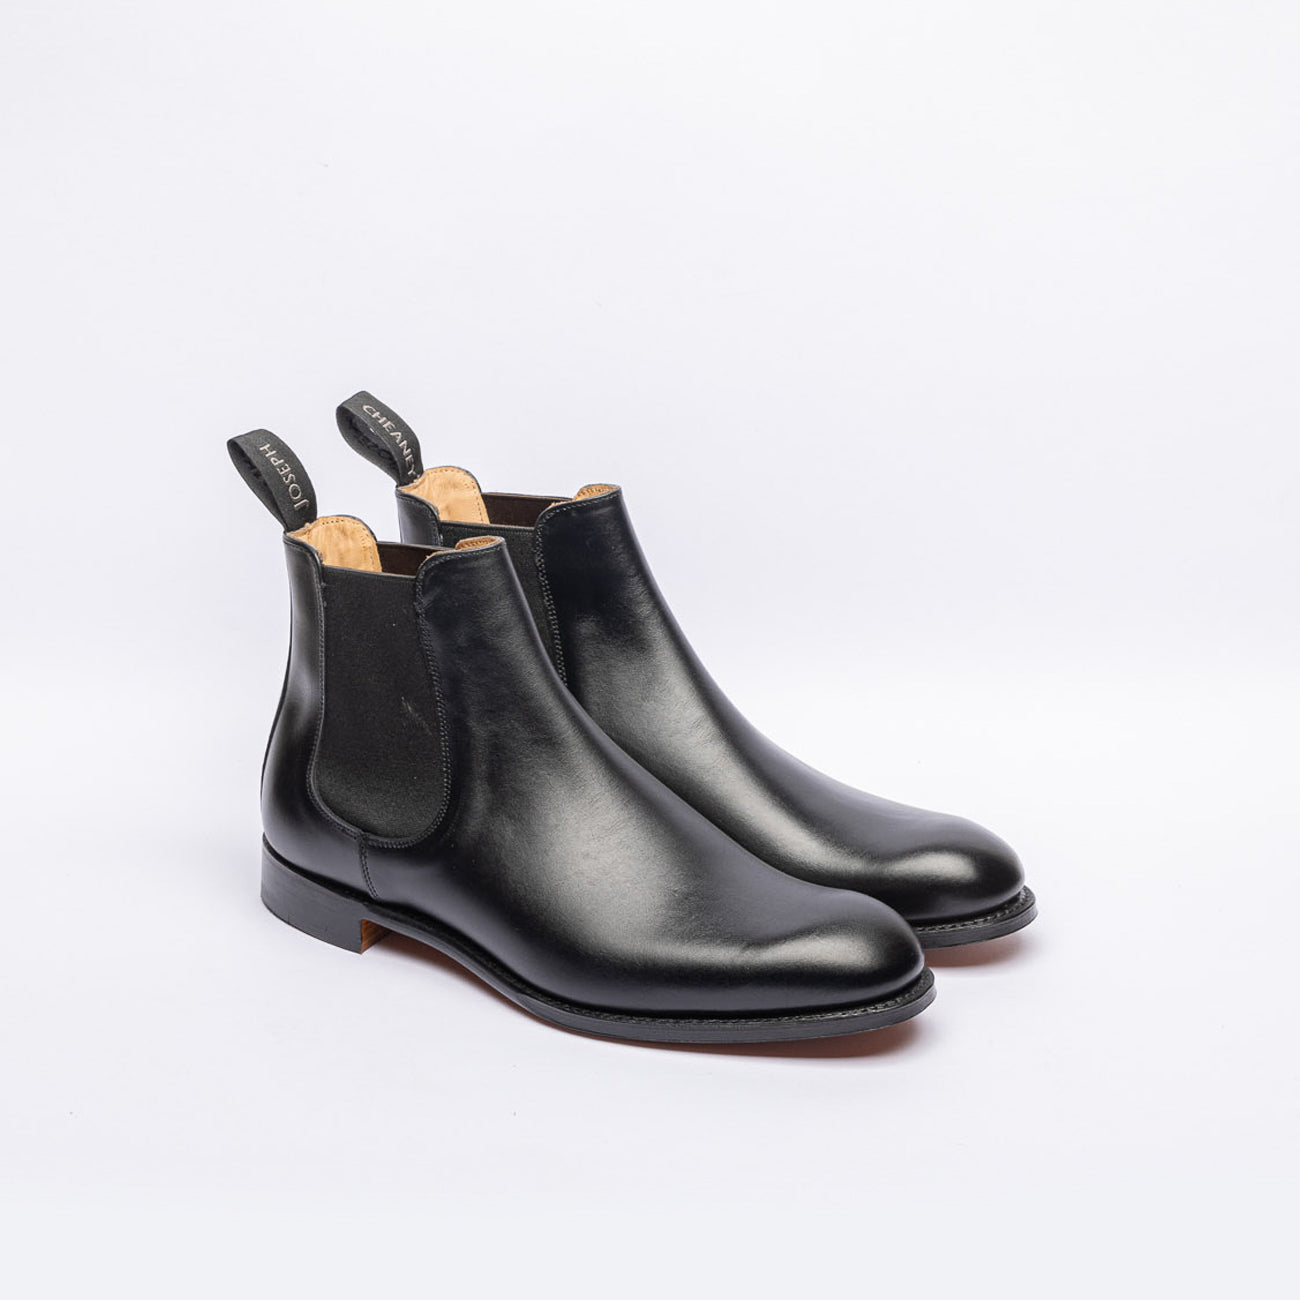 Cheaney Joseph & Sons Godfrey Chelsea boot in black leather